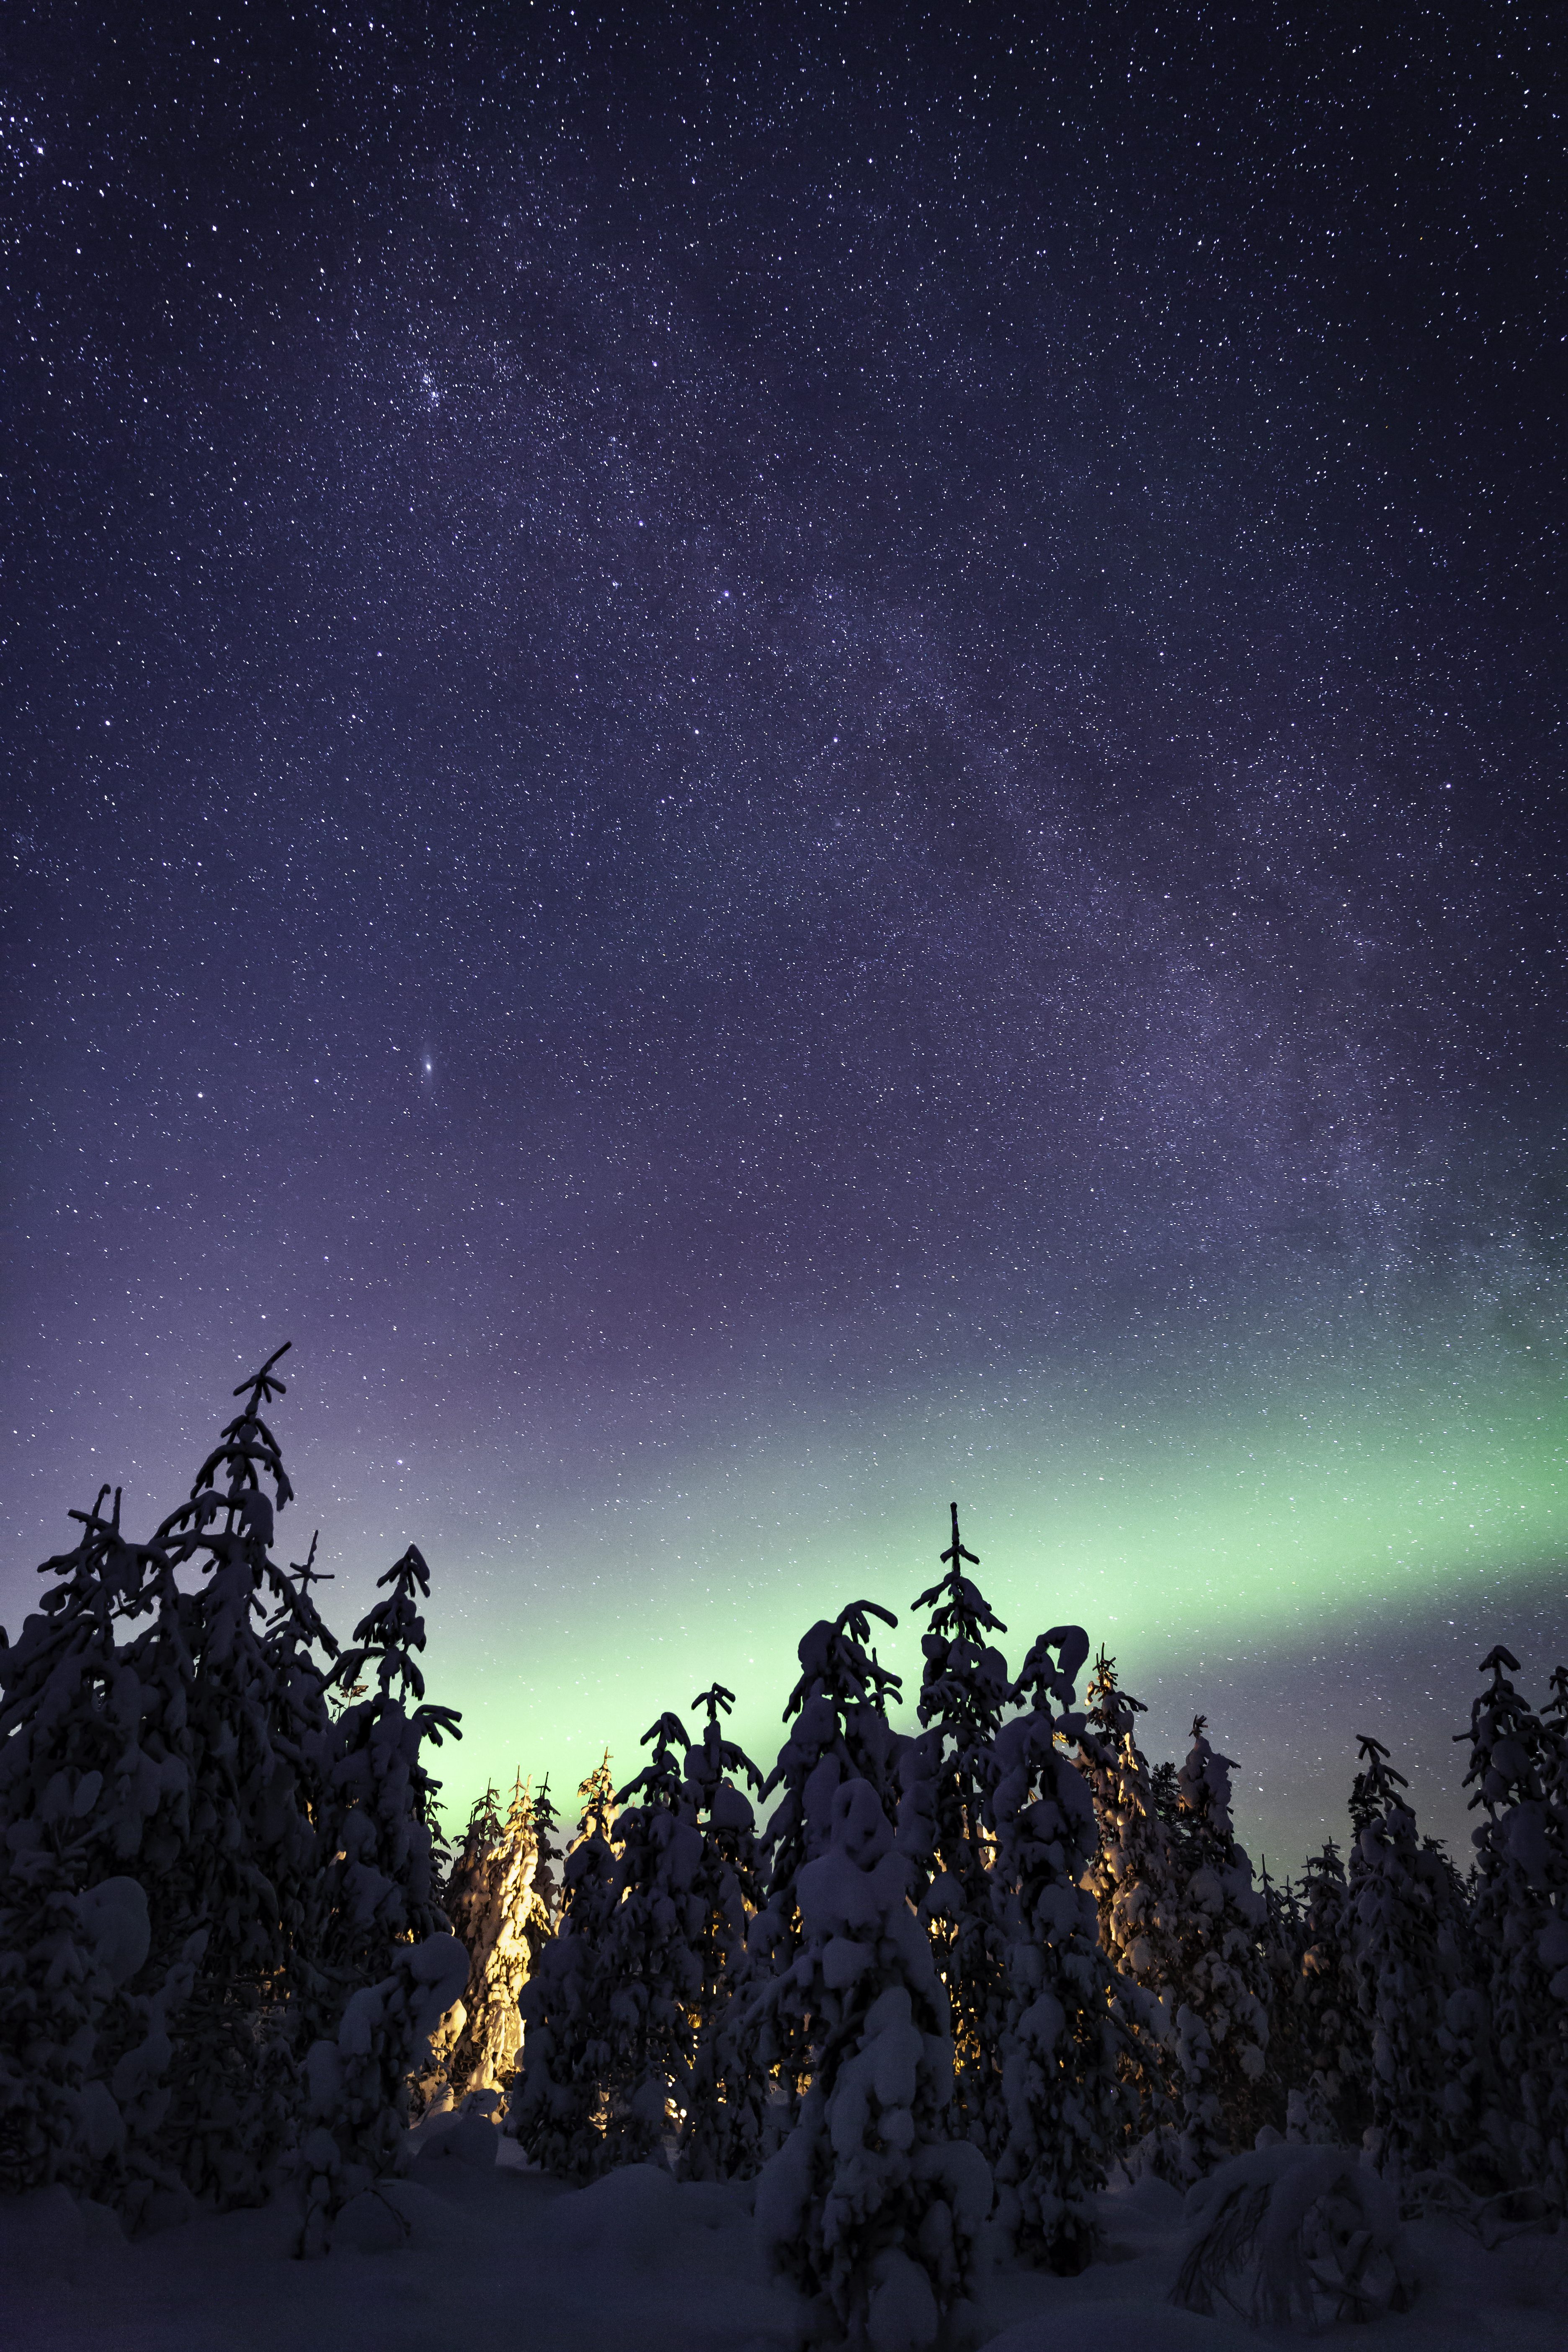 aurora borealis, northern lights, aurora, milky way, winter, nature, trees, starry sky